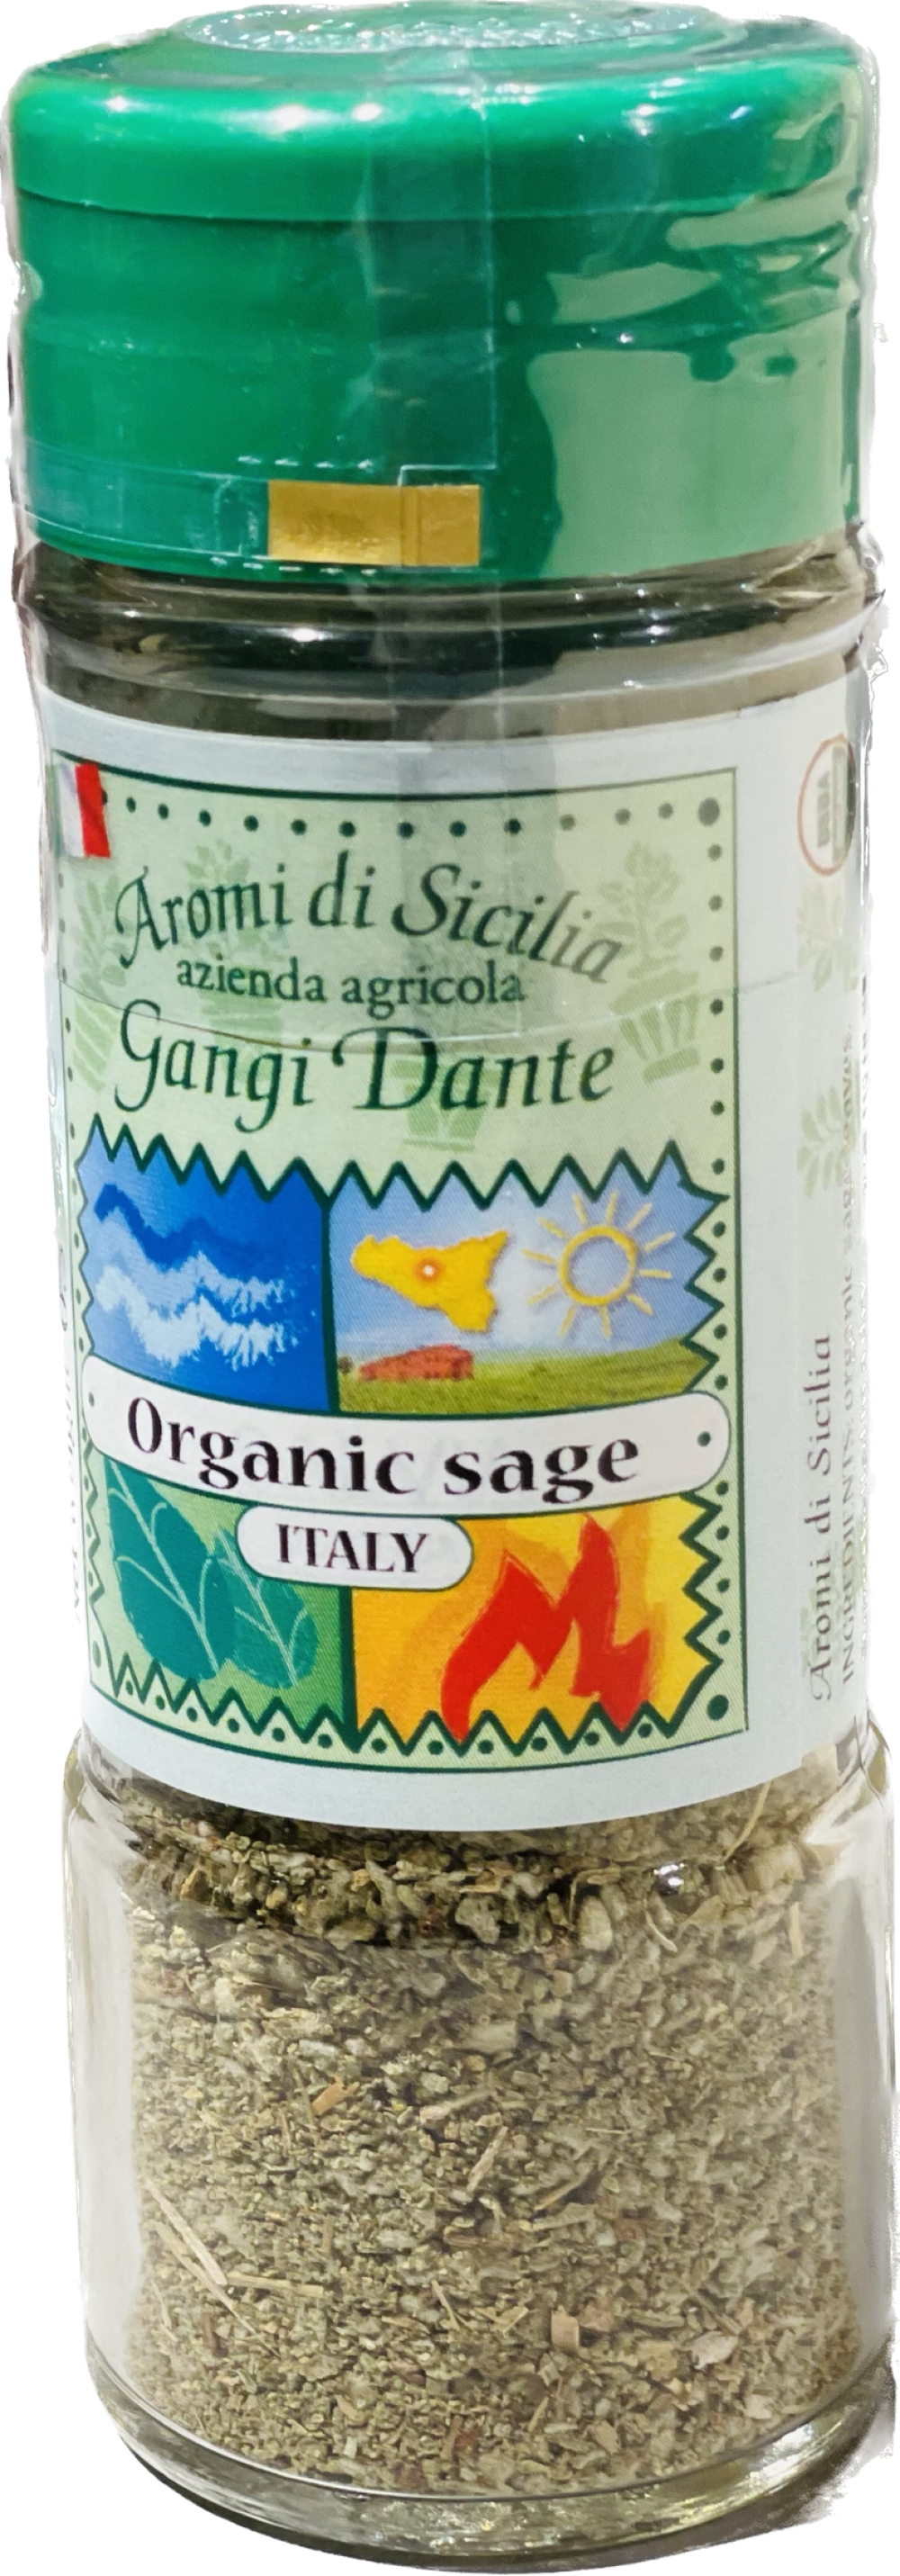 Salvia Dispenser 10g - Aromi di Sicilia